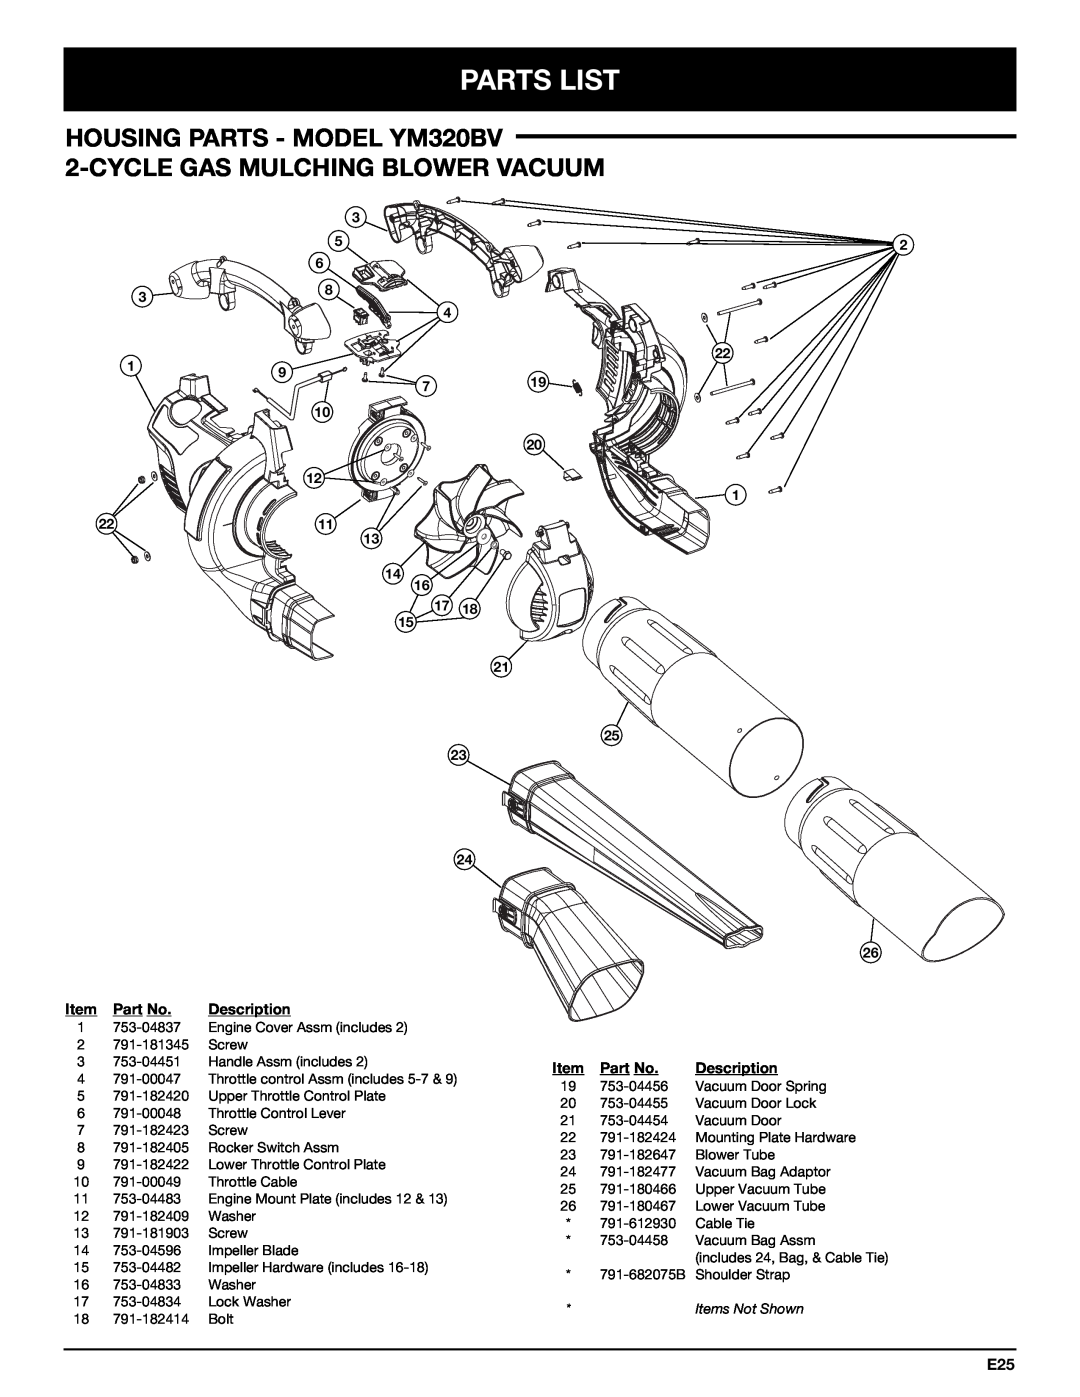 Bolens manual HOUSING PARTS - MODEL YM320BV, Cyclegas Mulching Blower Vacuum, Parts List, Items Not Shown 